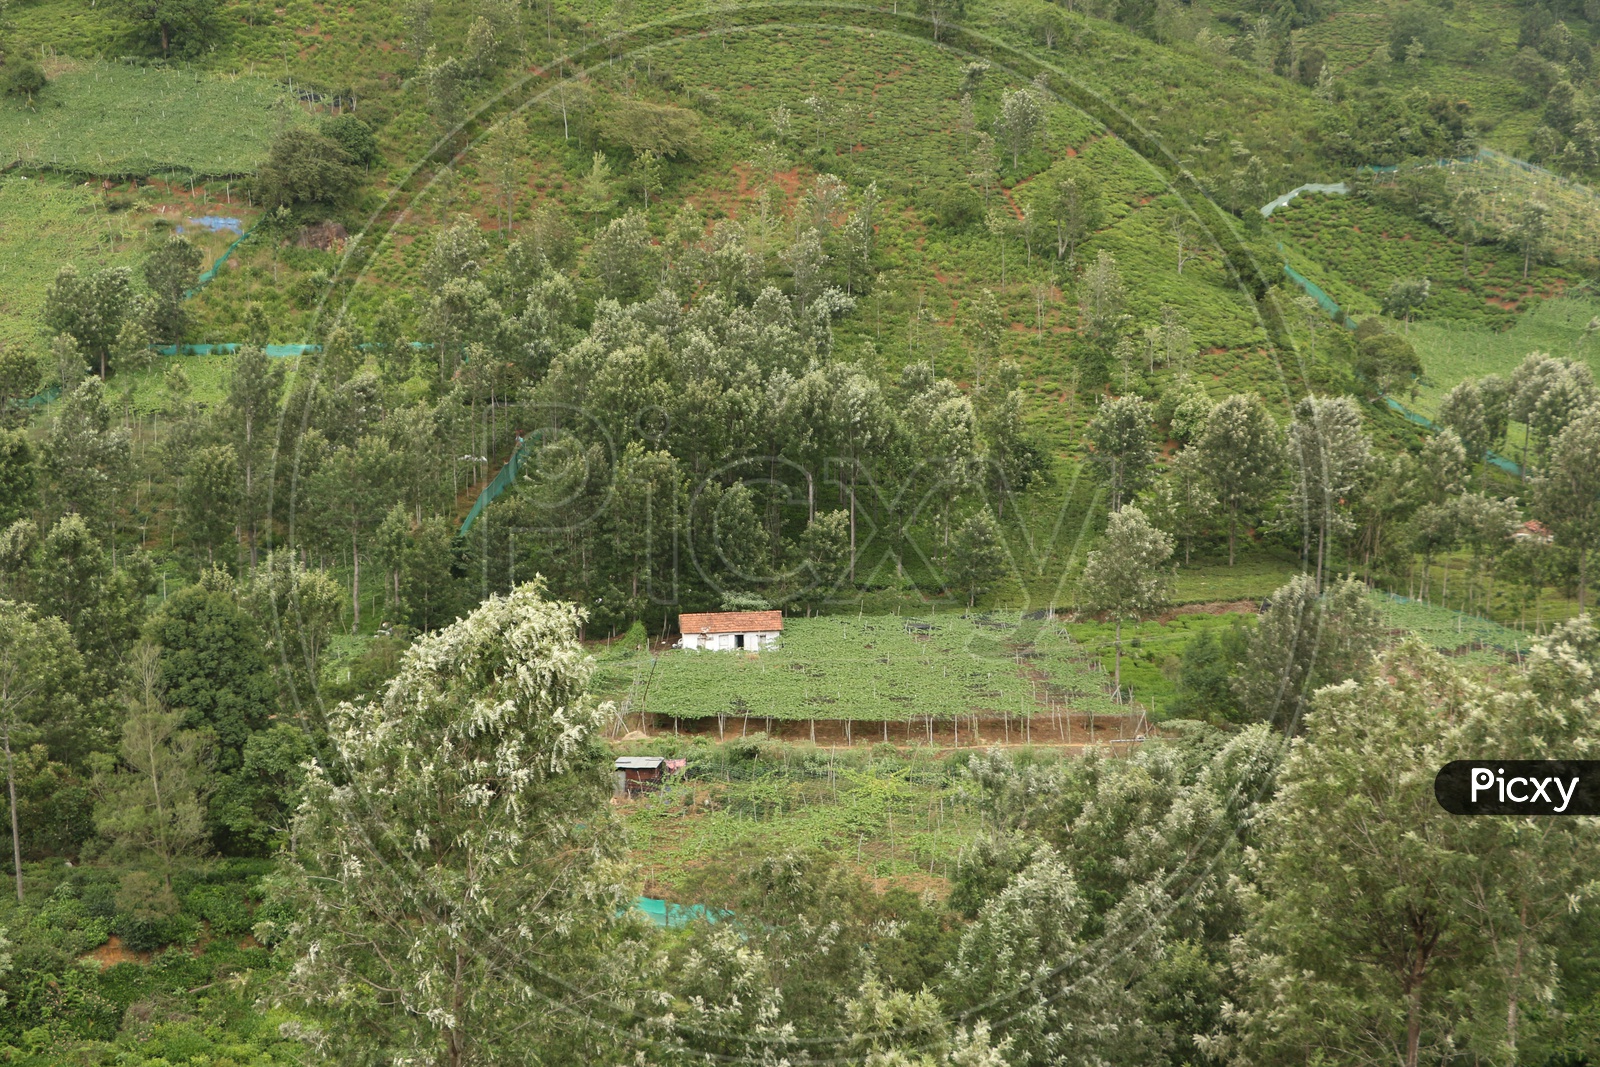 Tea Plantations In Ooty